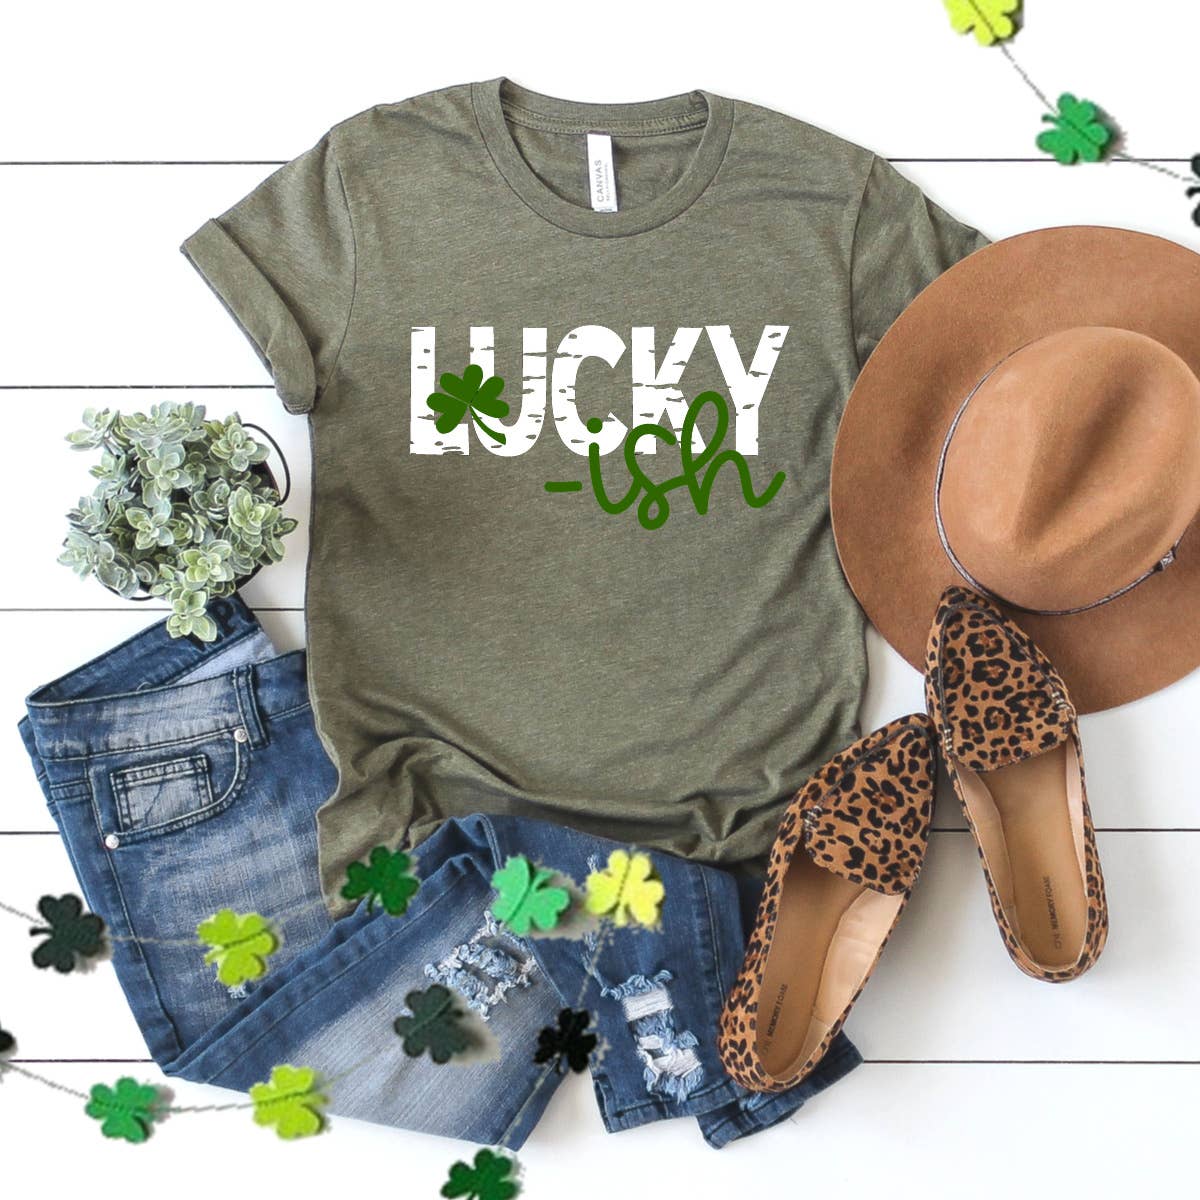 St. Patrick's Graphic Shirt- White & Green Lucky-ish